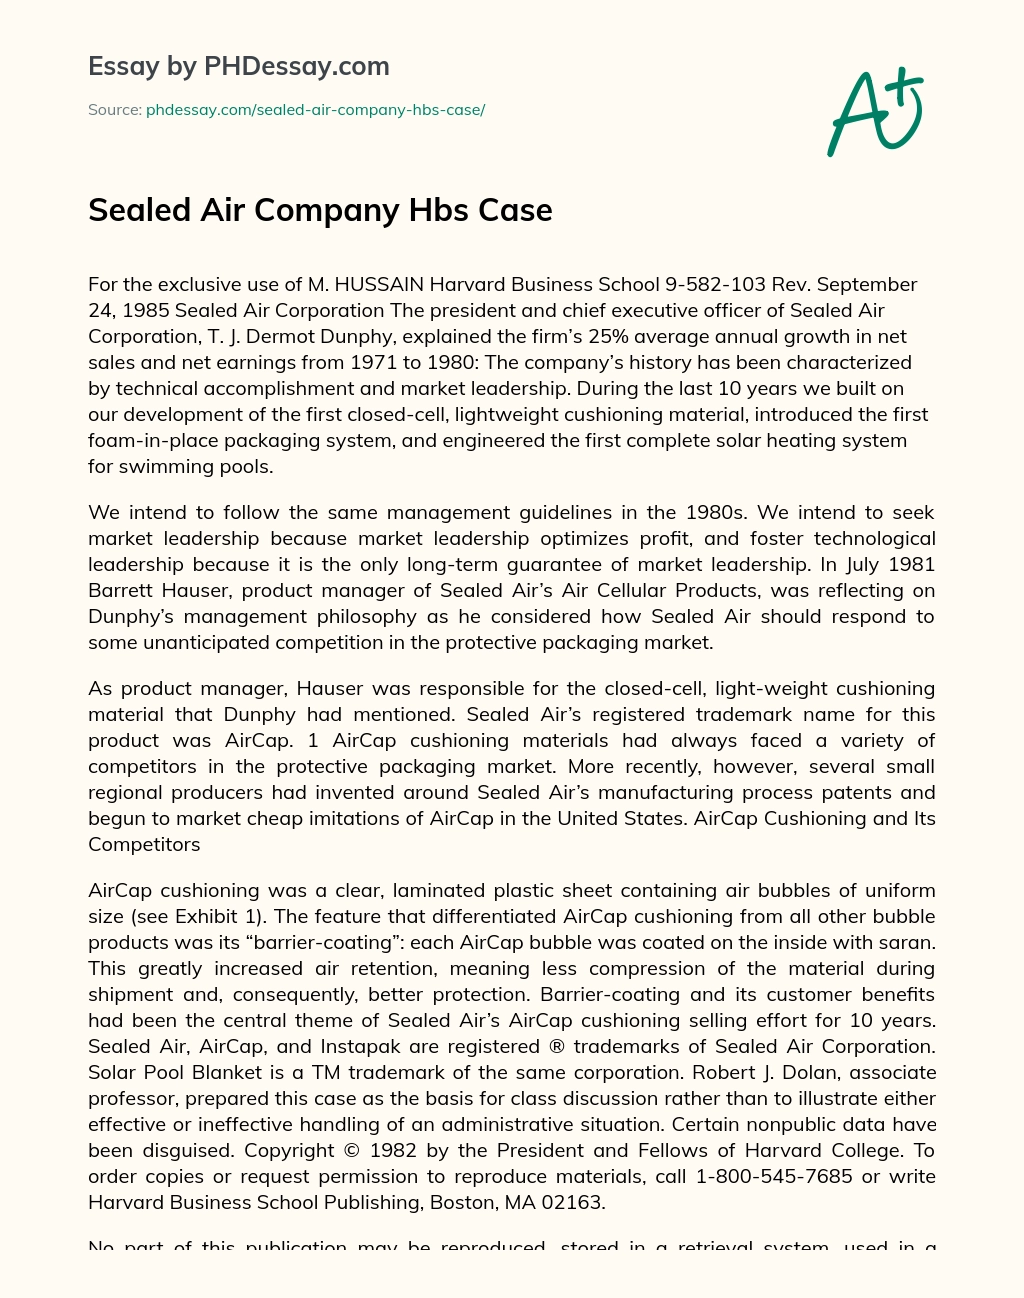 Sealed Air Company Hbs Case essay